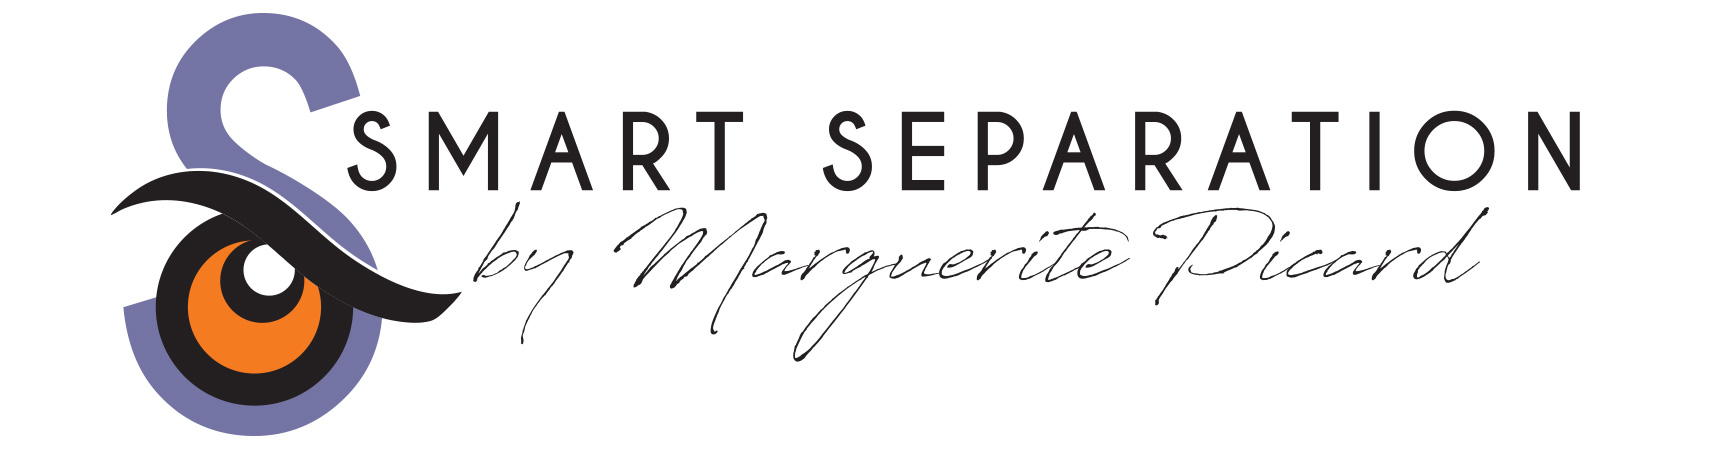 Smart Separation logo